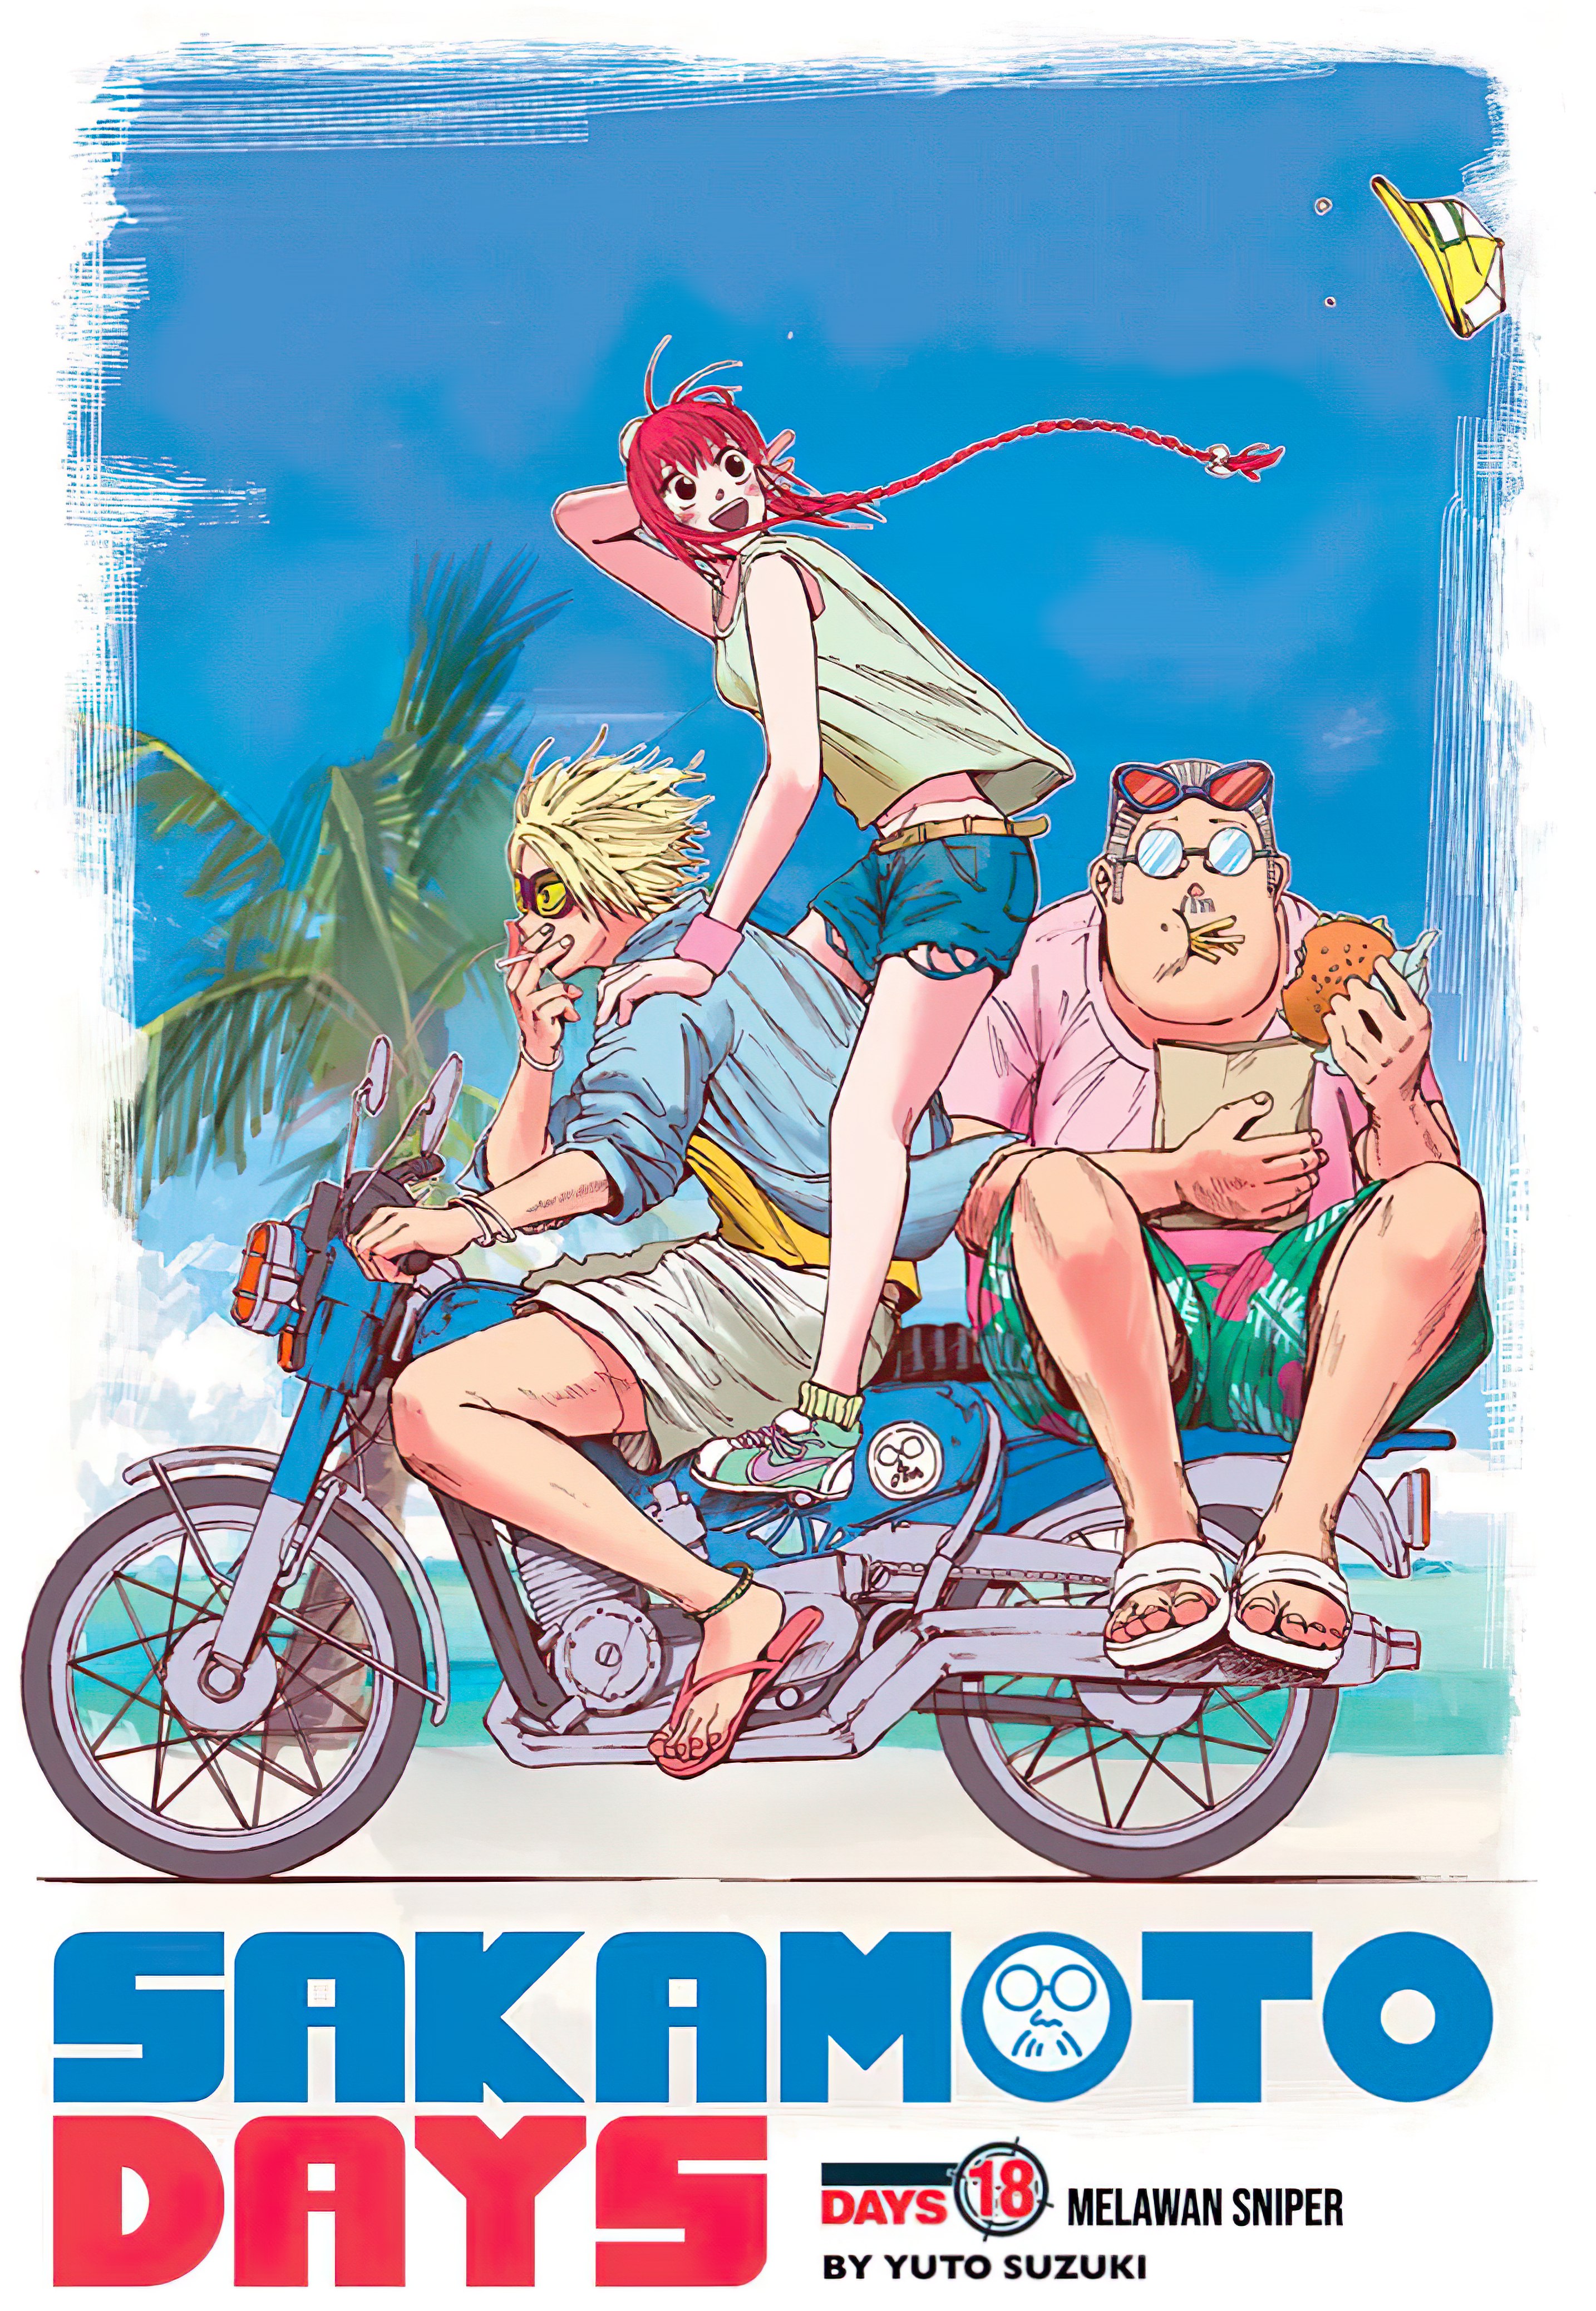 Anime 2868x4152 Sakamoto days anime anime boys anime girls vehicle motorcycle food